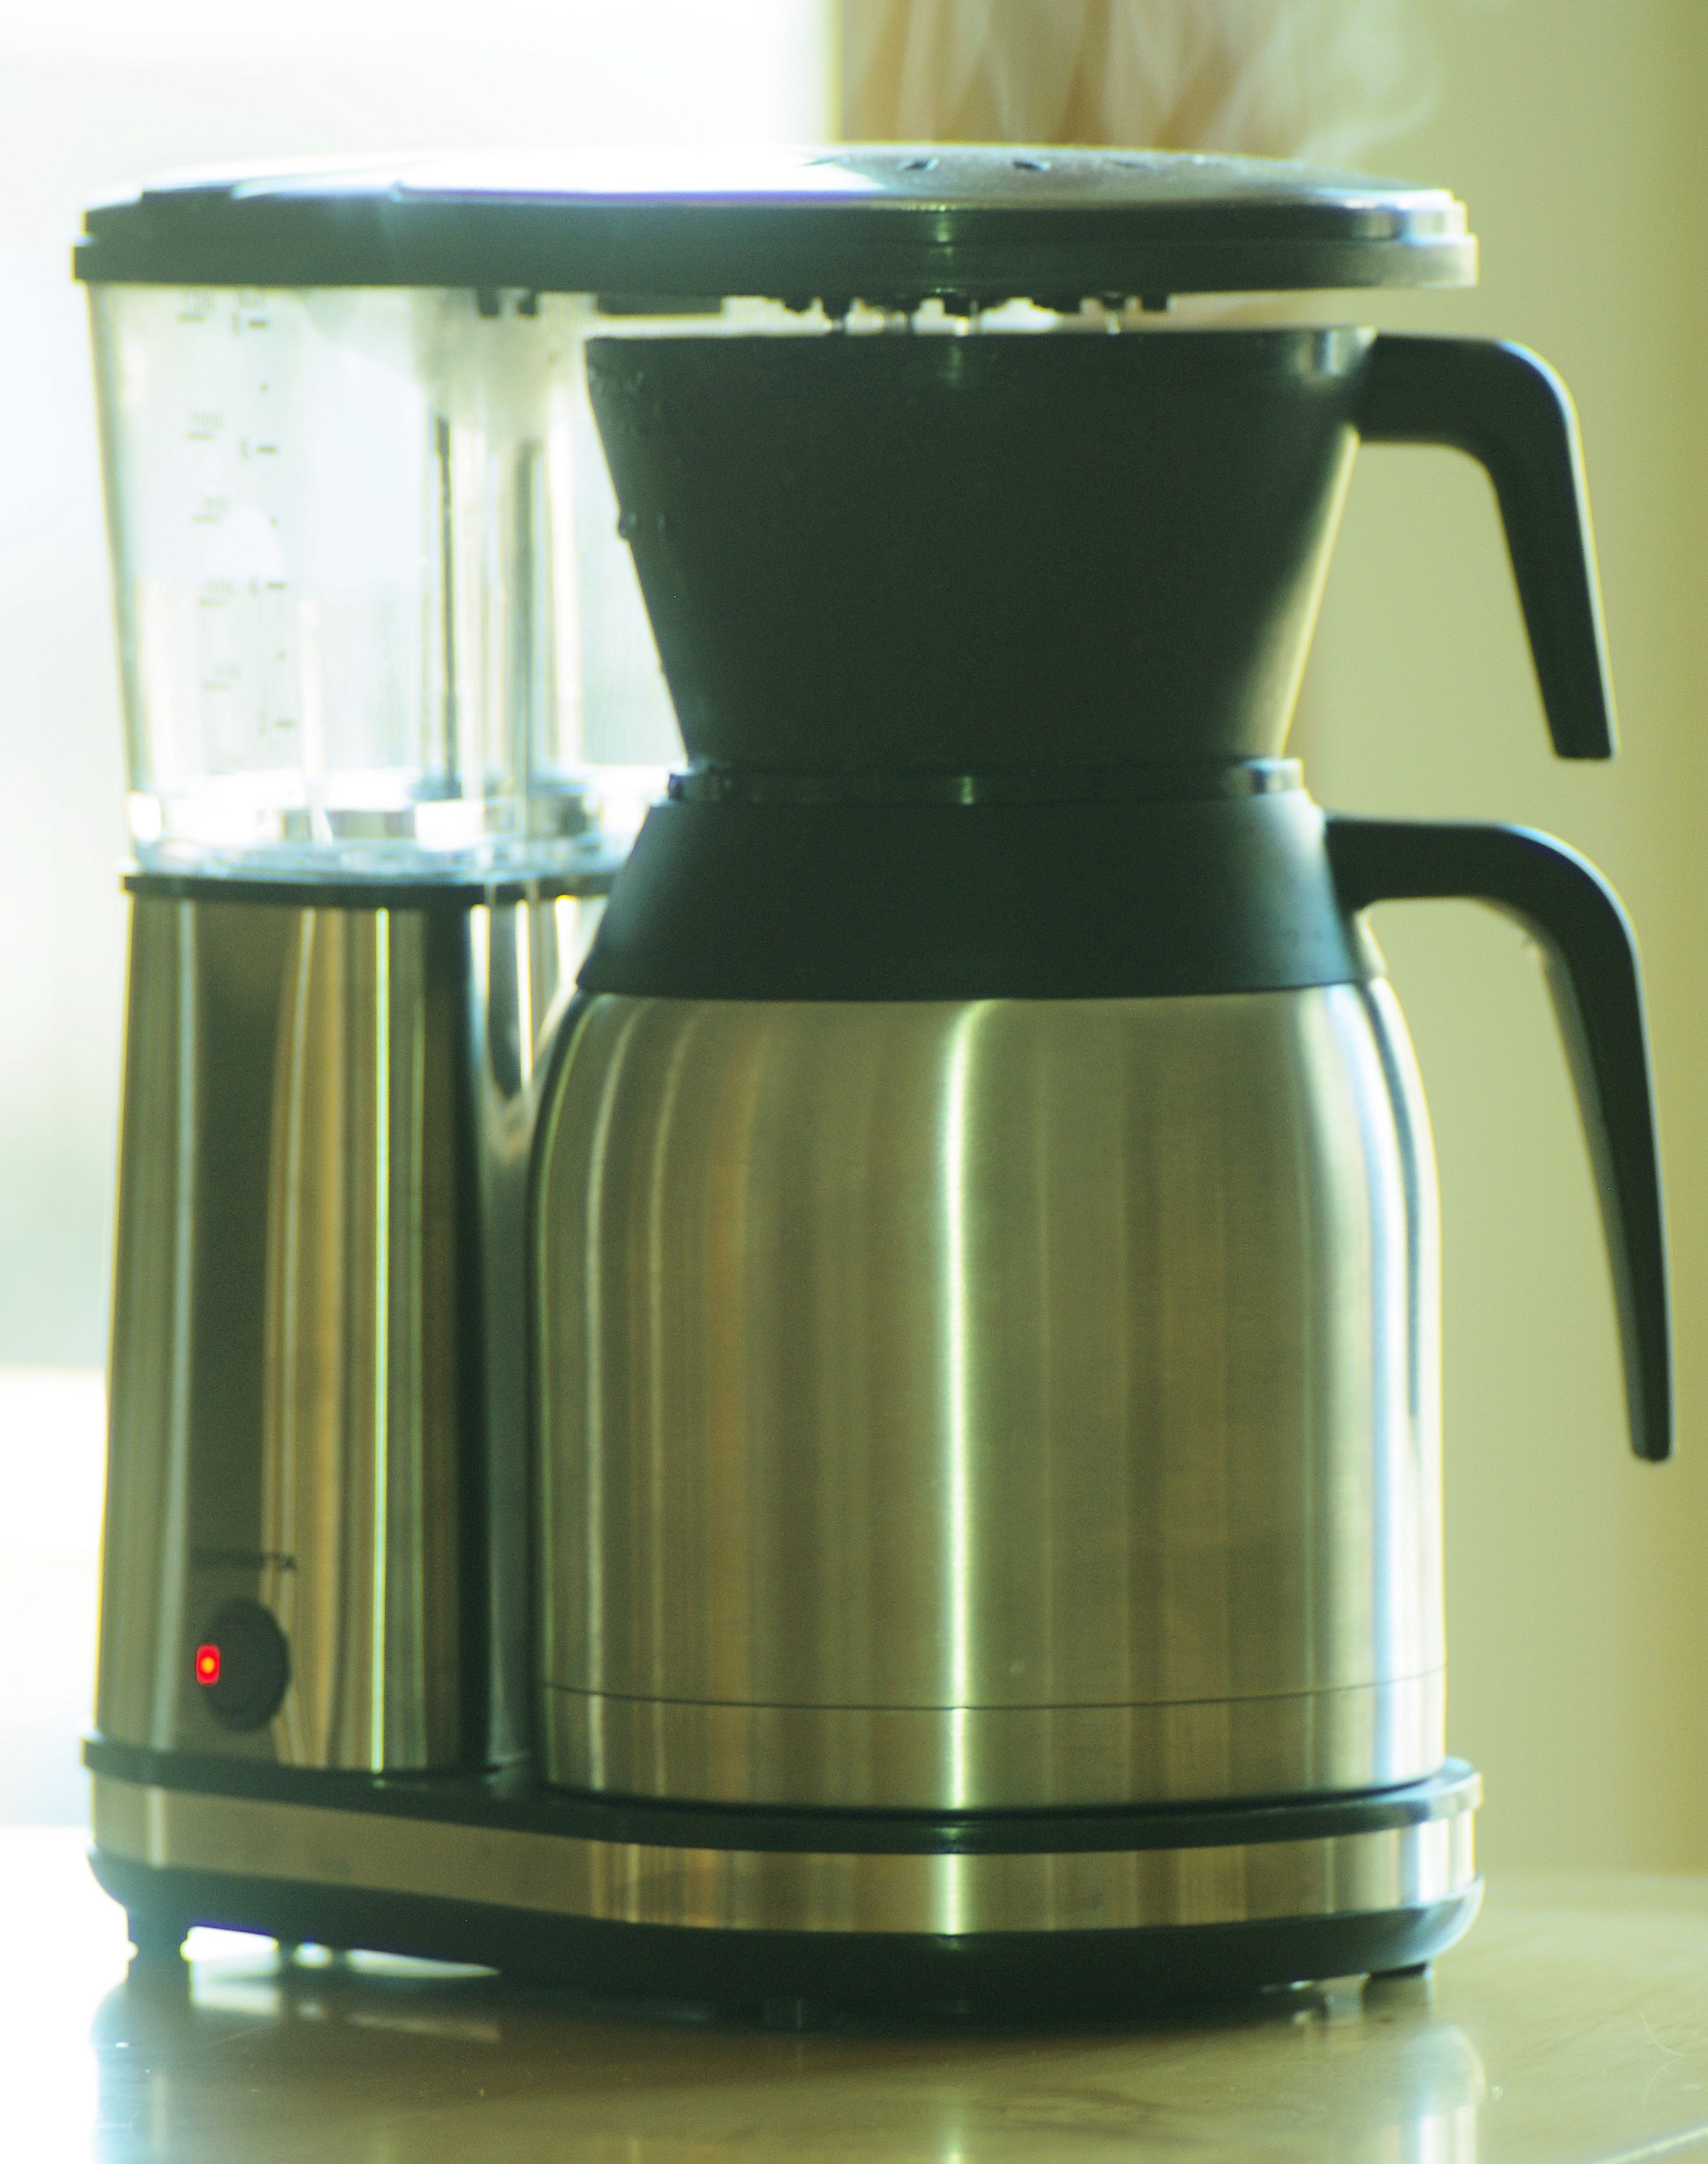 https://coffeecompanion.com/wp-content/uploads/2014/11/Bonavita-Brewer-crop.jpg